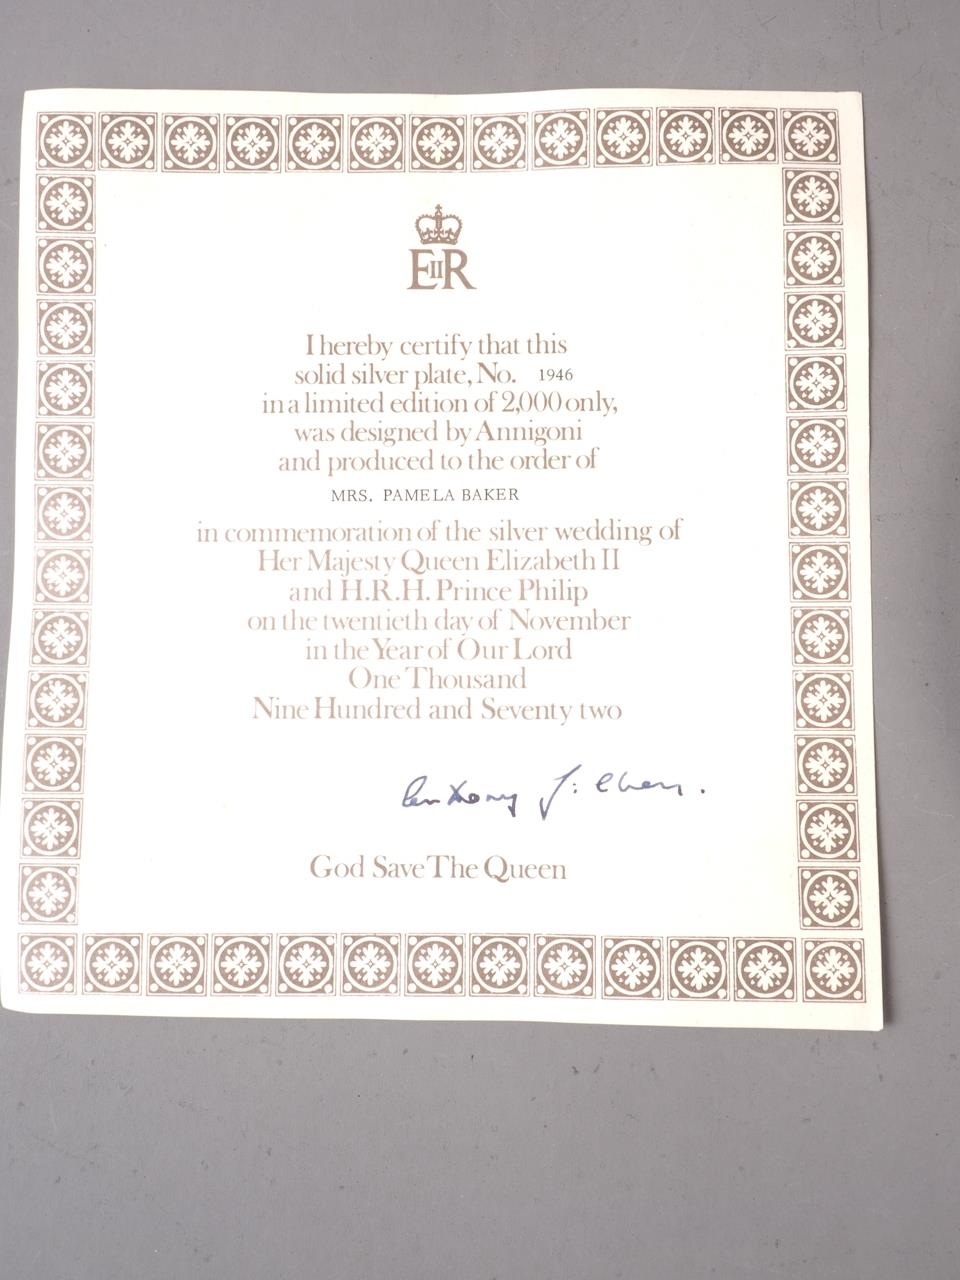 A Pietro Annigoni limited edition Queen Elizabeth II silver wedding anniversary commemorative silver - Image 3 of 3